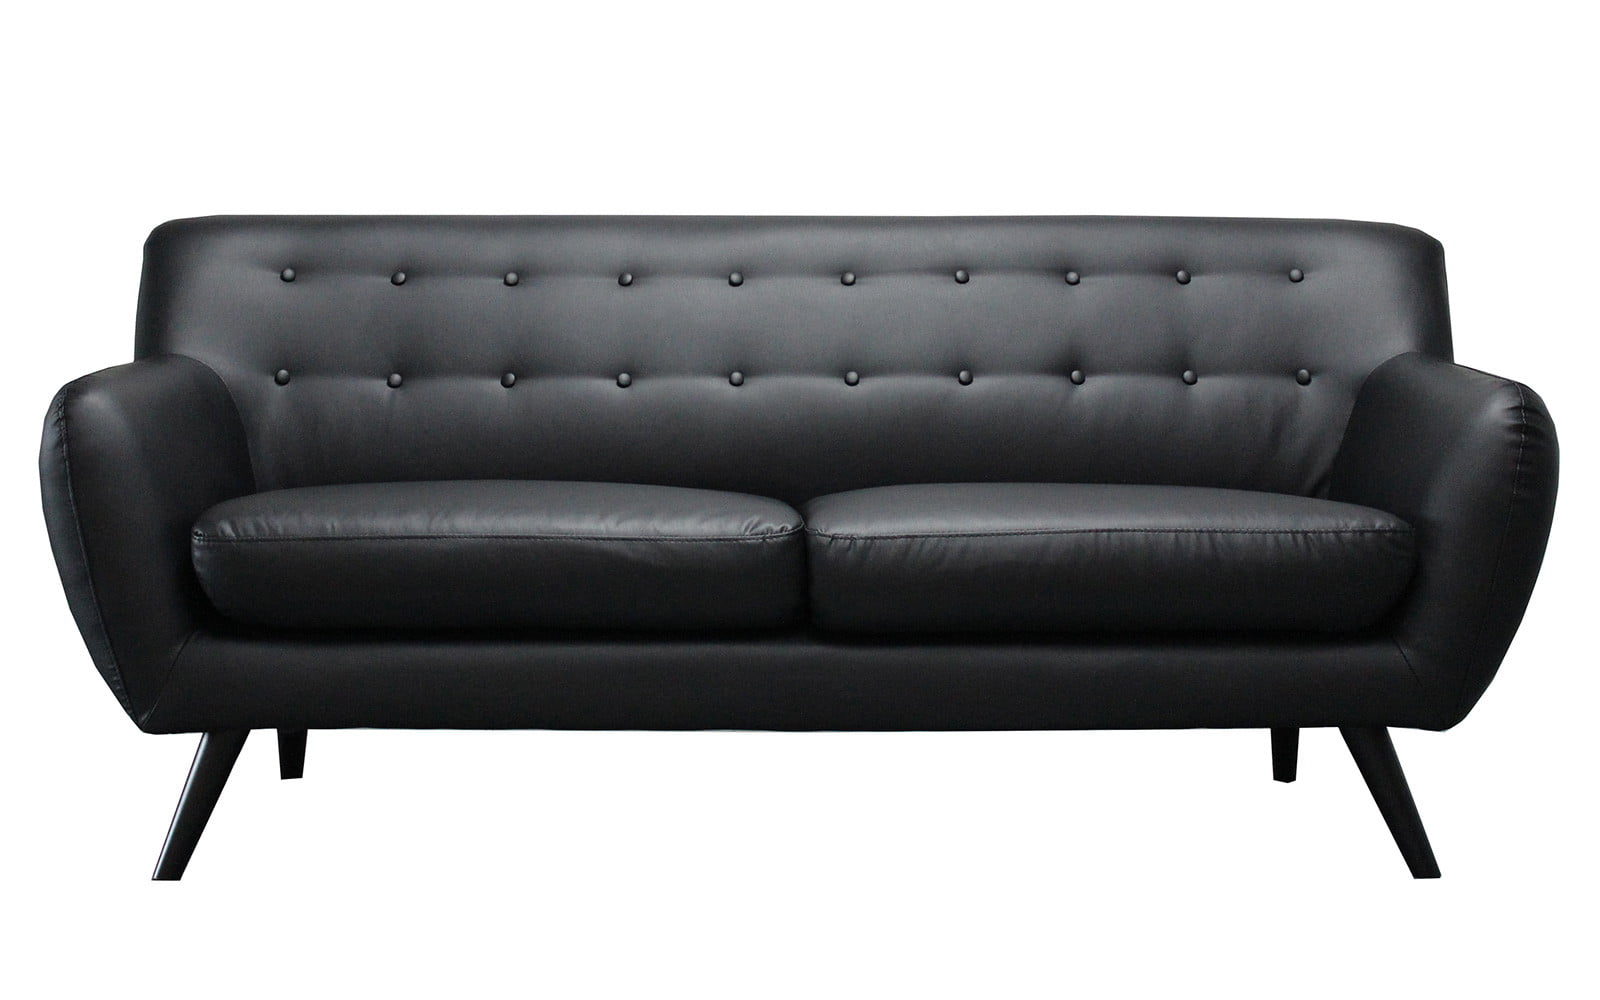 bonded leather sofa springfield il